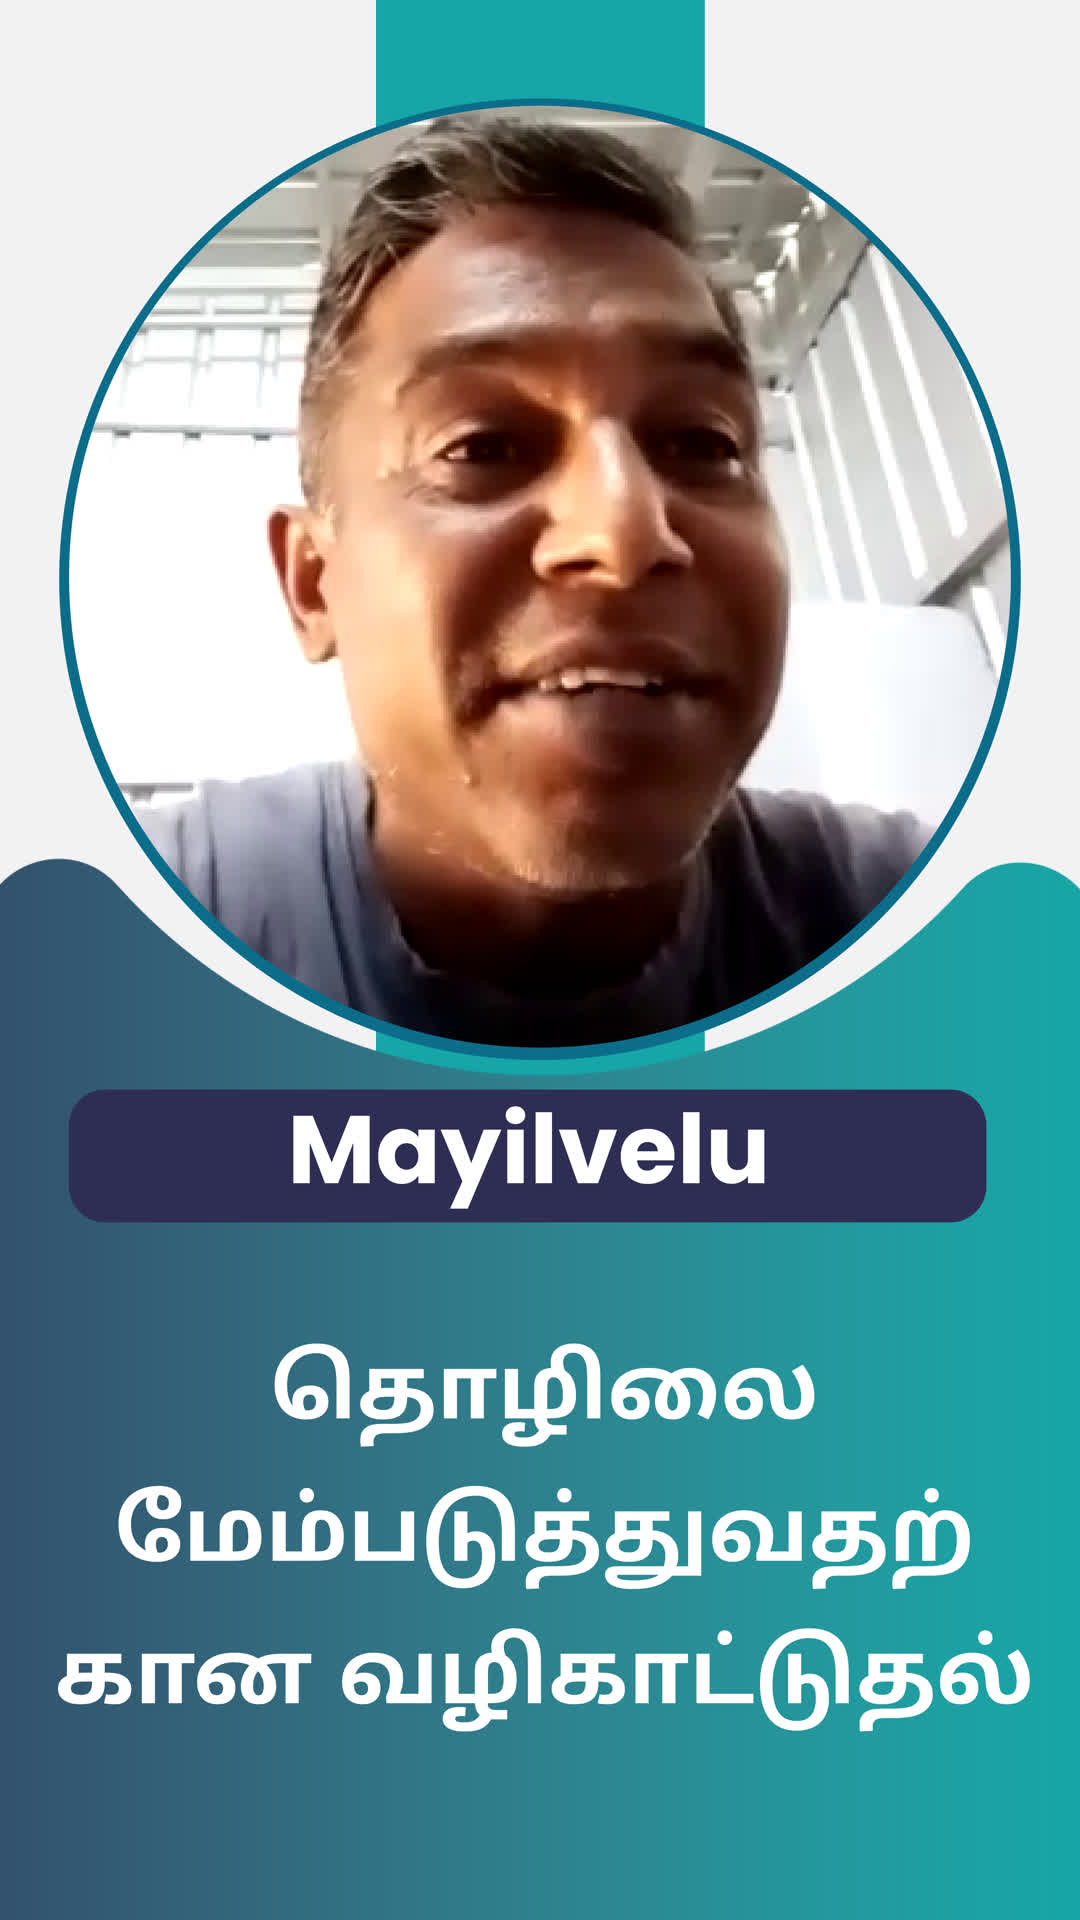 Mayilvelu's Honest Review of ffreedom app - Coimbatore ,Tamil Nadu